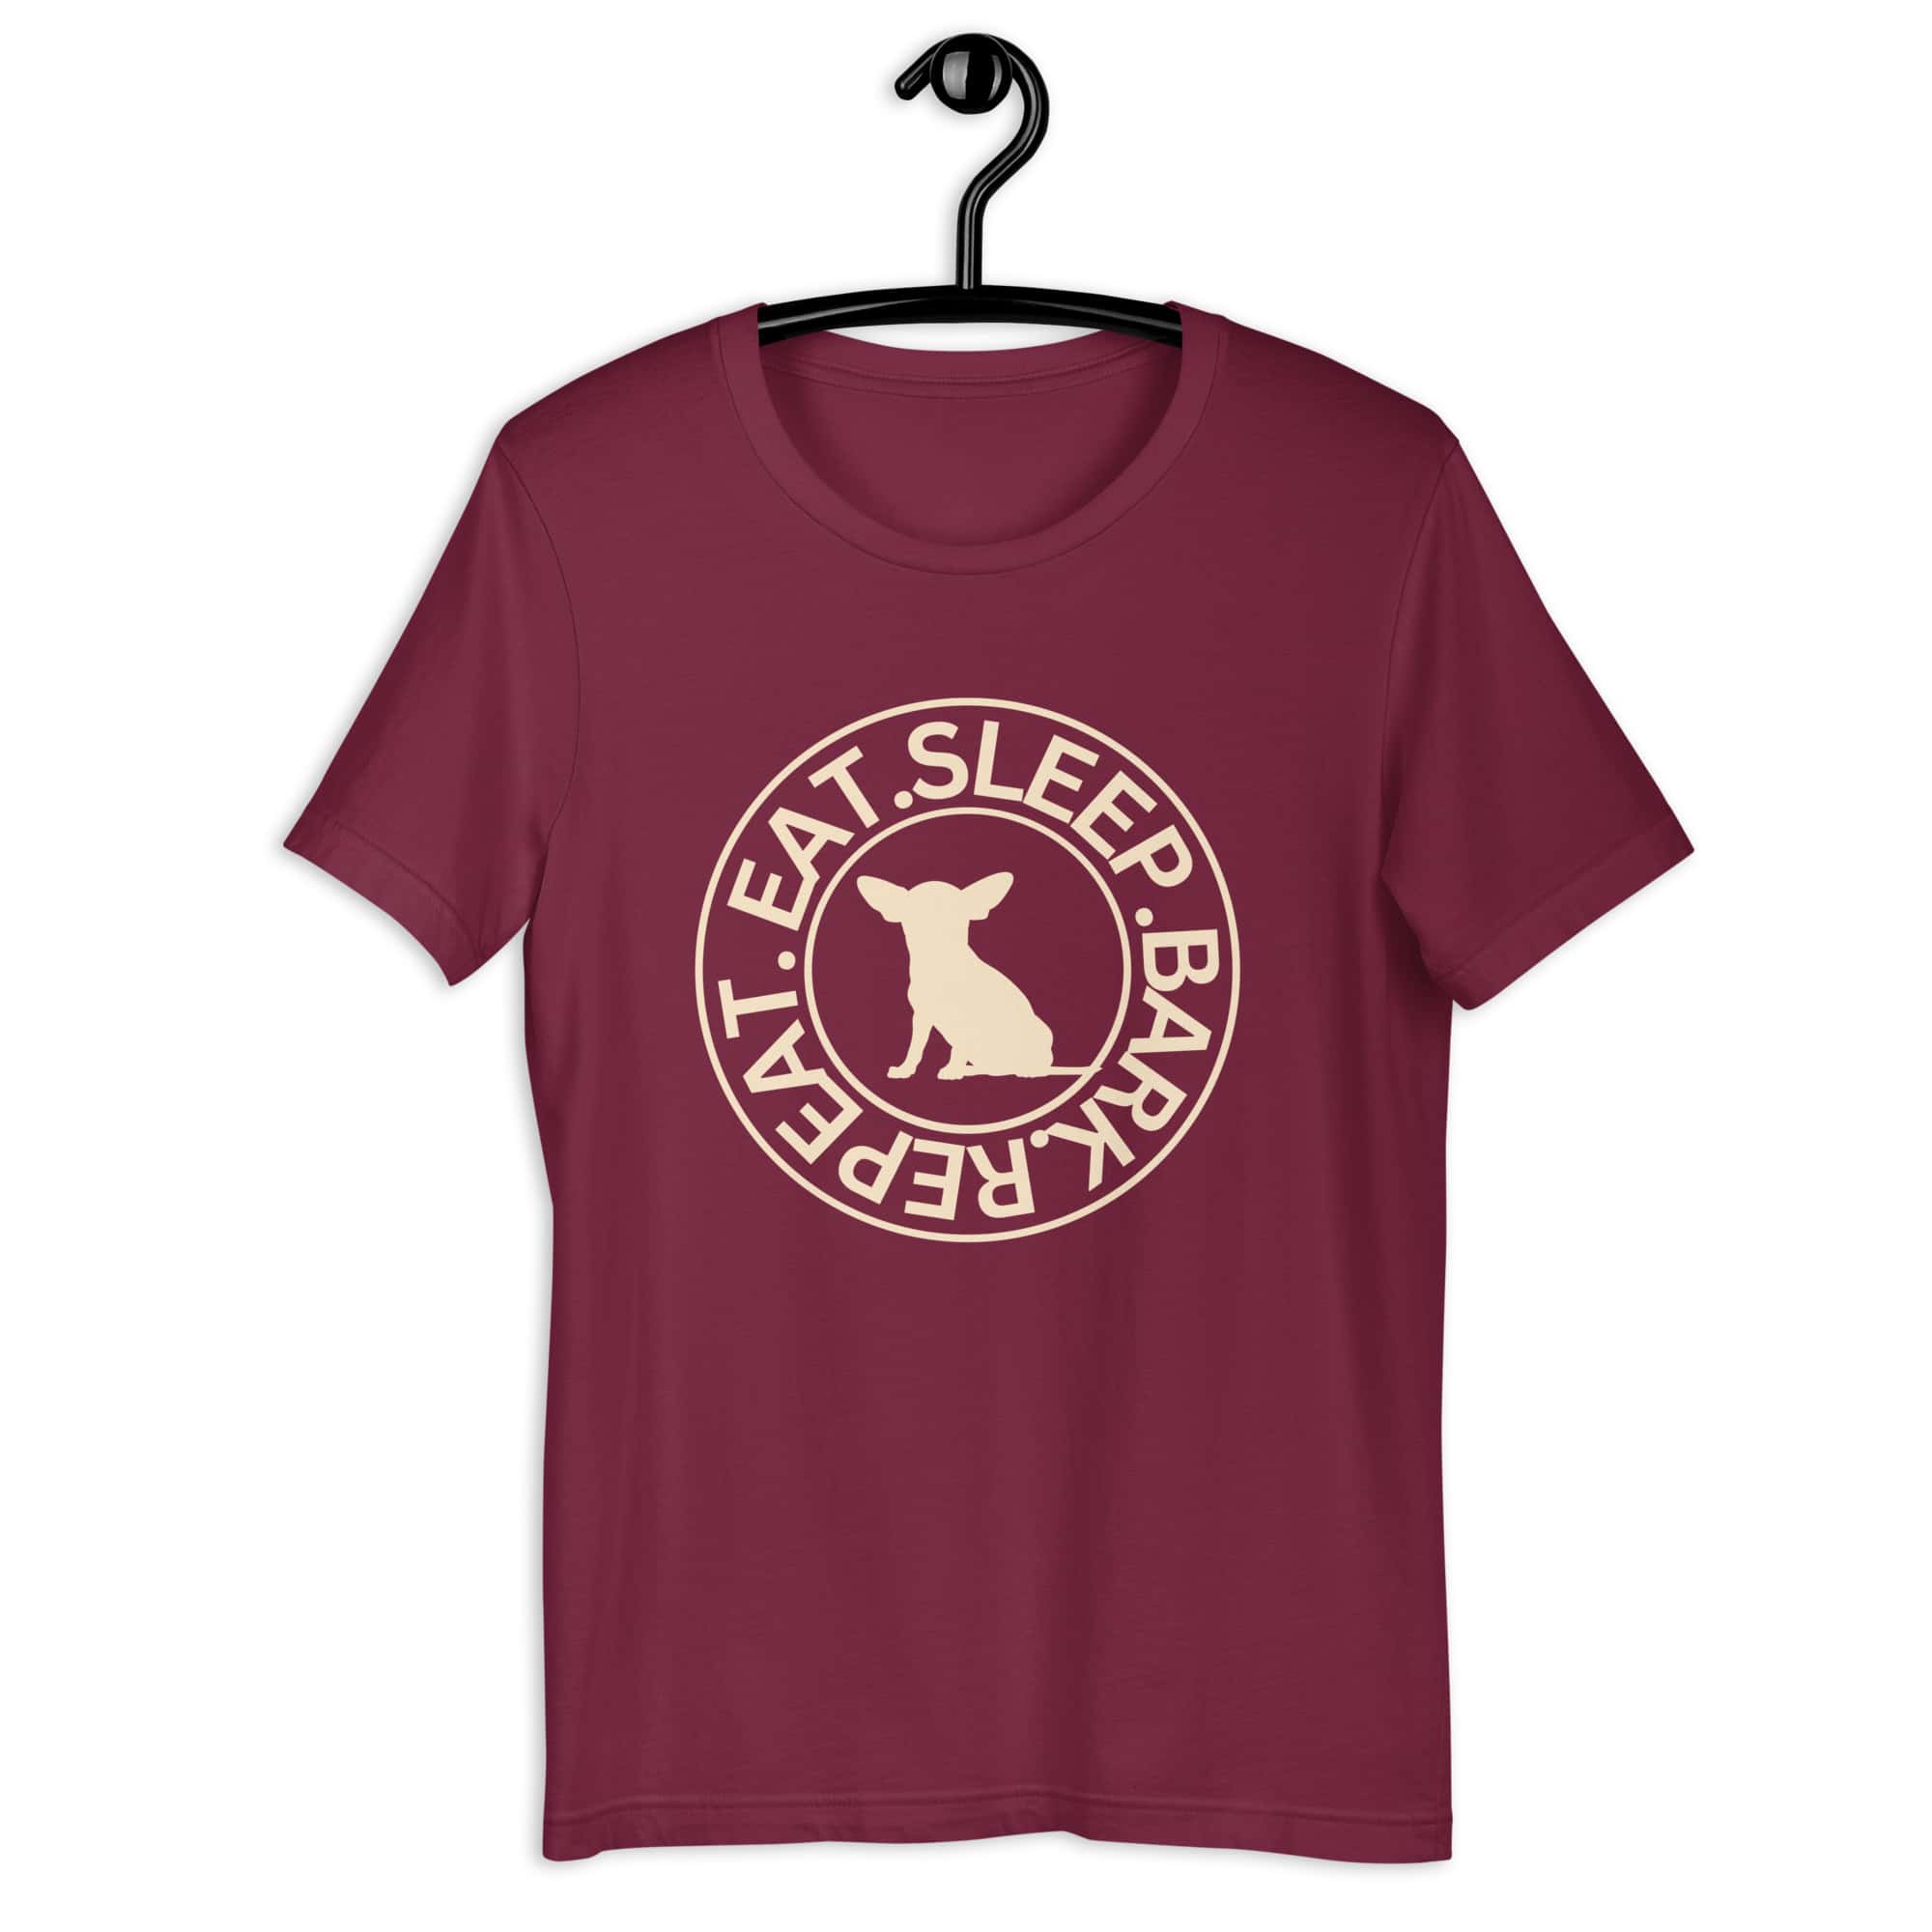 Eat Sleep Bark Repeat Chihuahua Unisex T-Shirt. Maroon